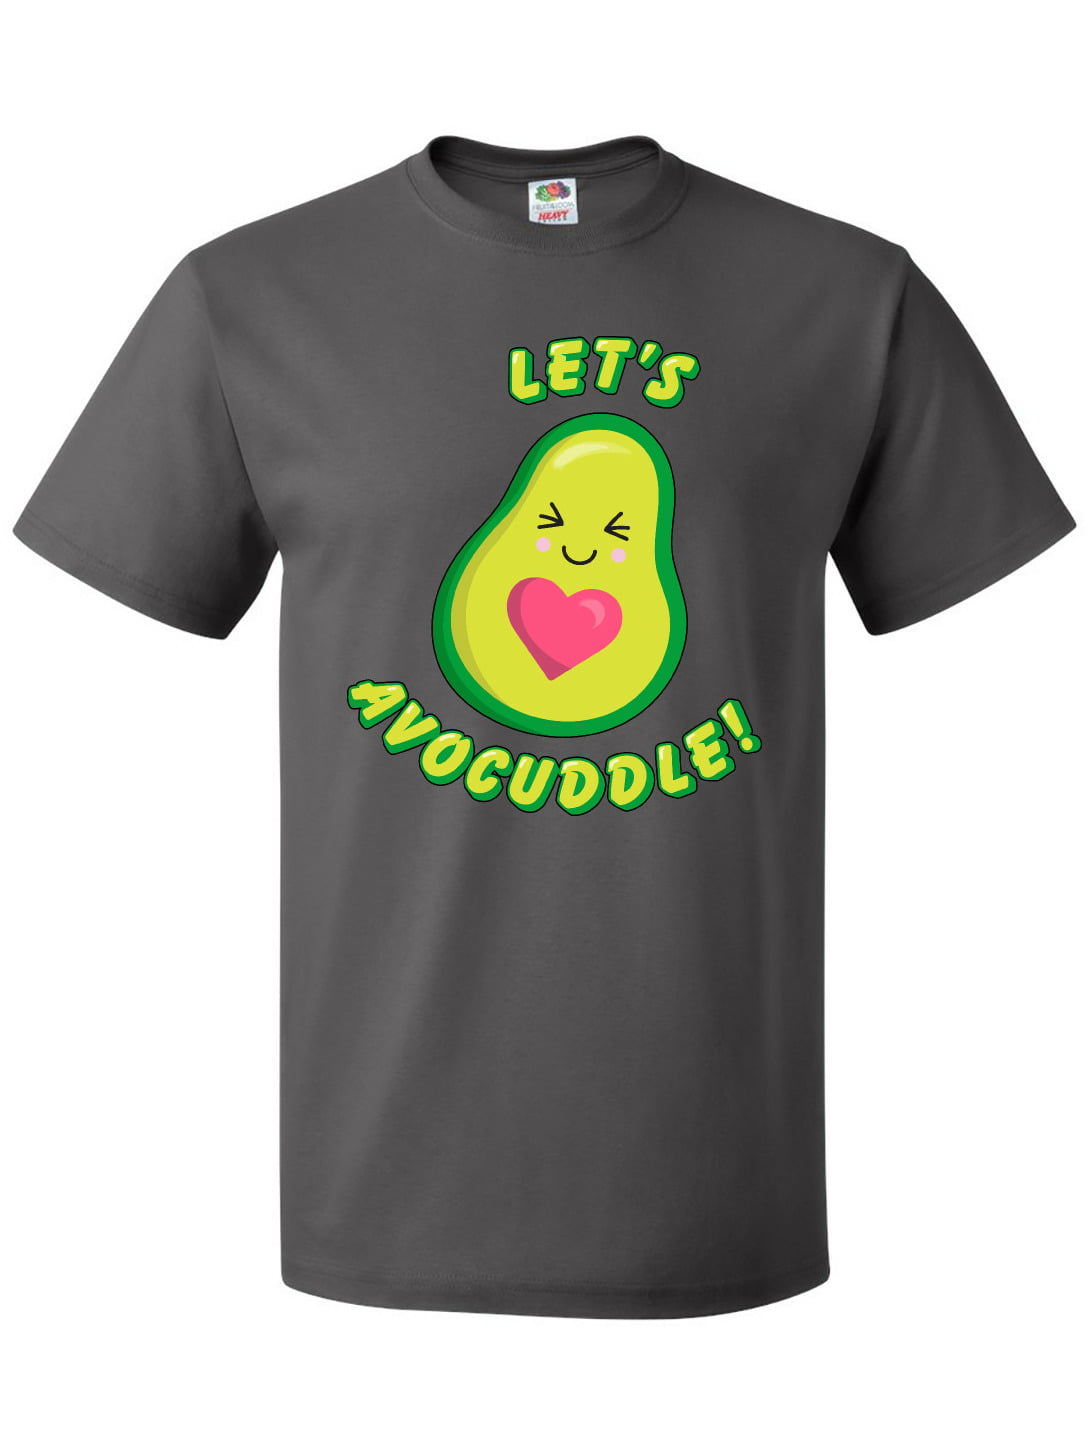 Inktastic Let's Avocuddle Cute Avocado with Heart T-Shirt - Walmart.com